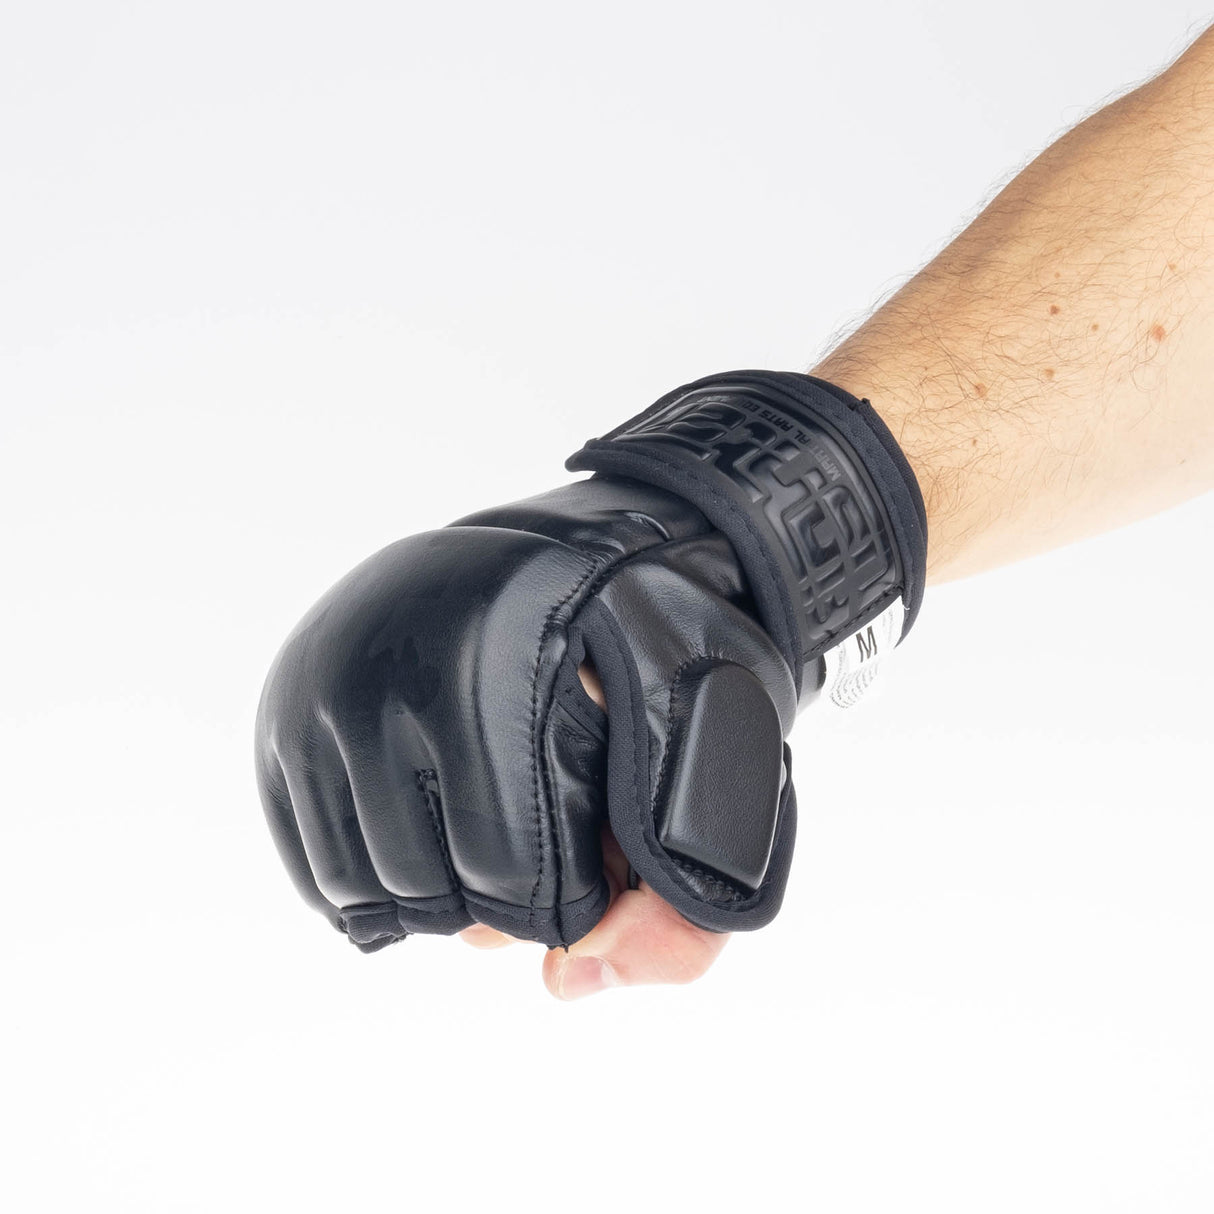 Gants de compétition MMA Fighter - camouflage noir, FMG-002CBK